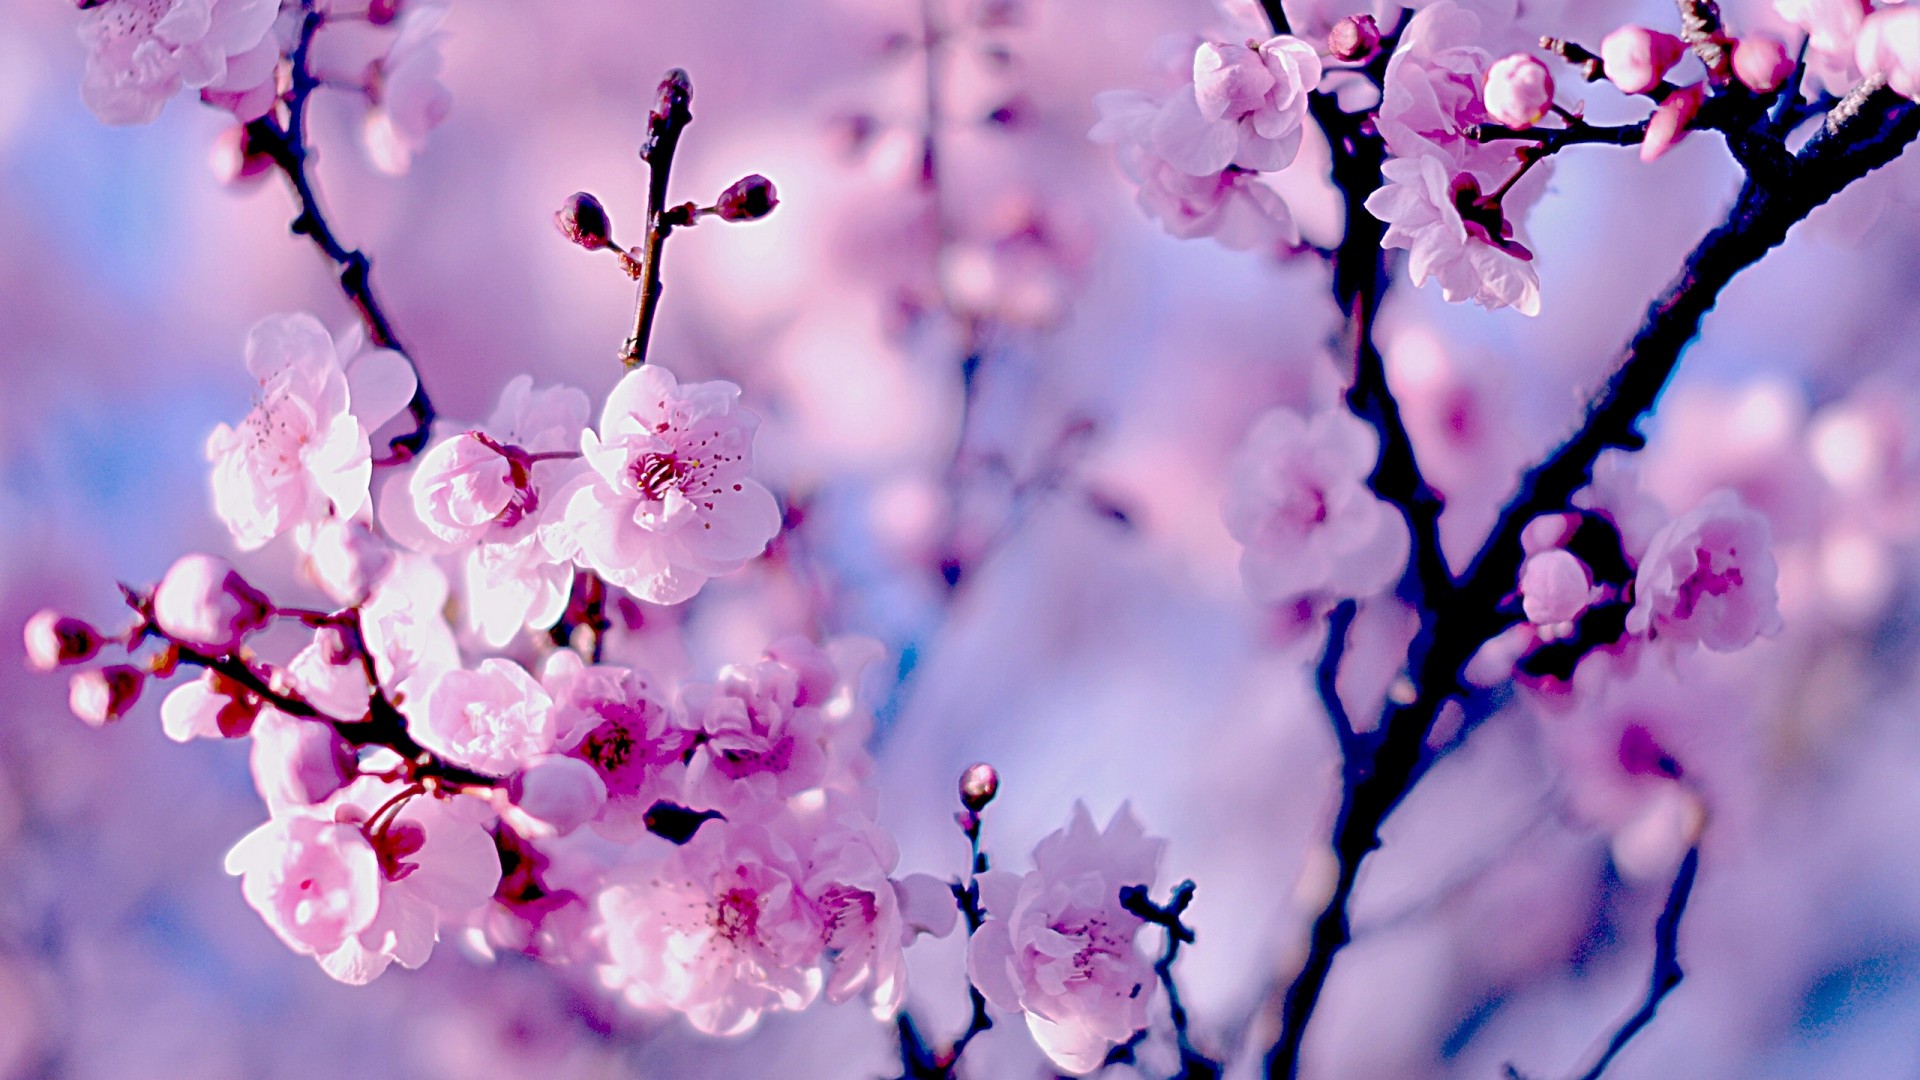 cherry blossom blurred background - Google-haku | Moods | Pinterest ...